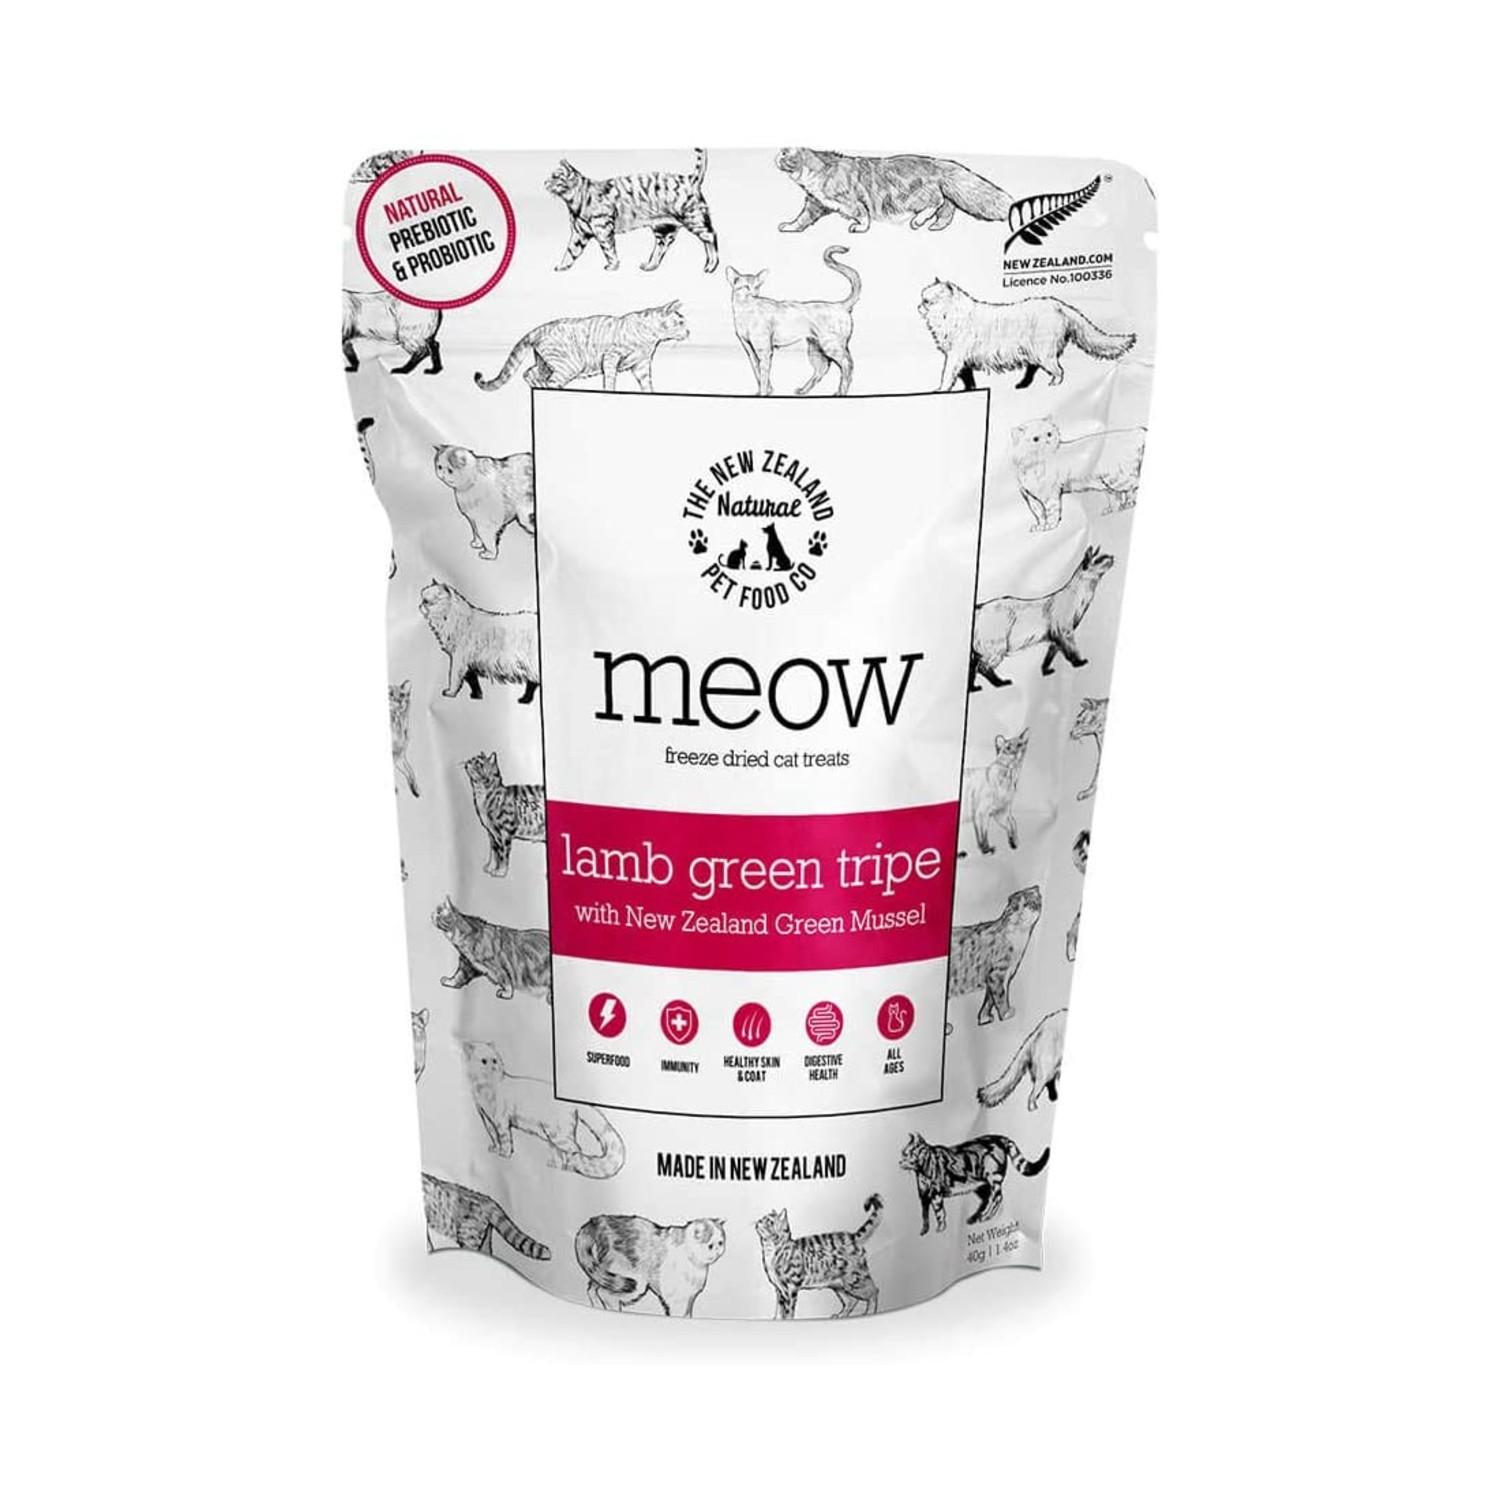 The New Zealand Natural Pet Food Co. Meow Freeze Dried Cat Treats - Lamb Green Tripe